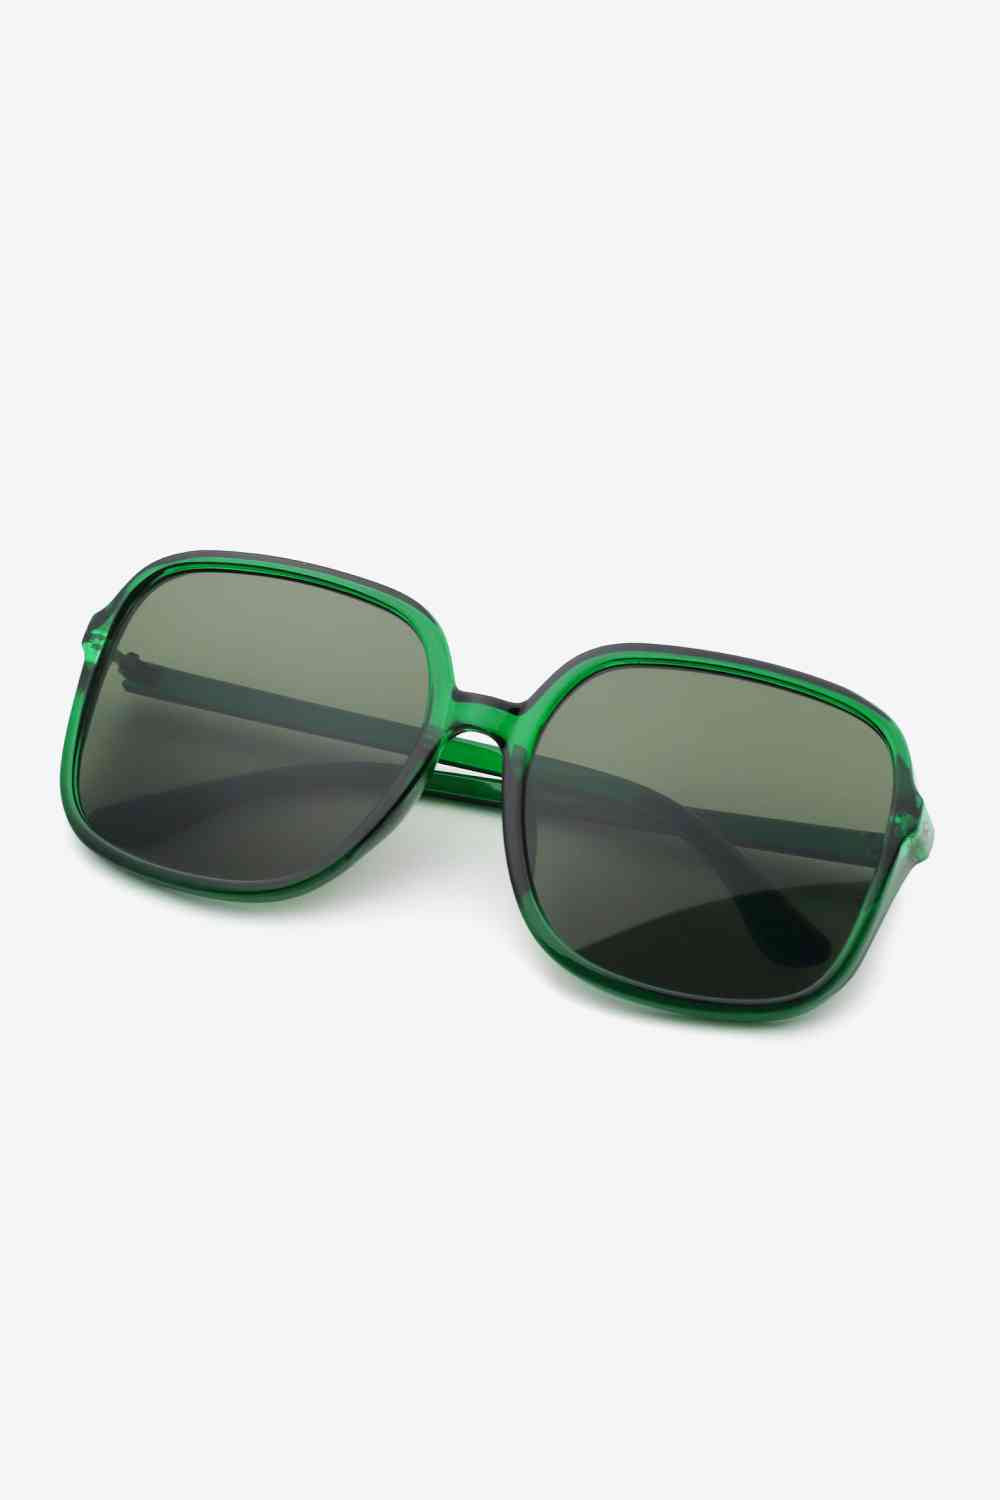 TEEK - Simply Square Style Sunglasses EYEGLASSES TEEK Trend Mid Green  